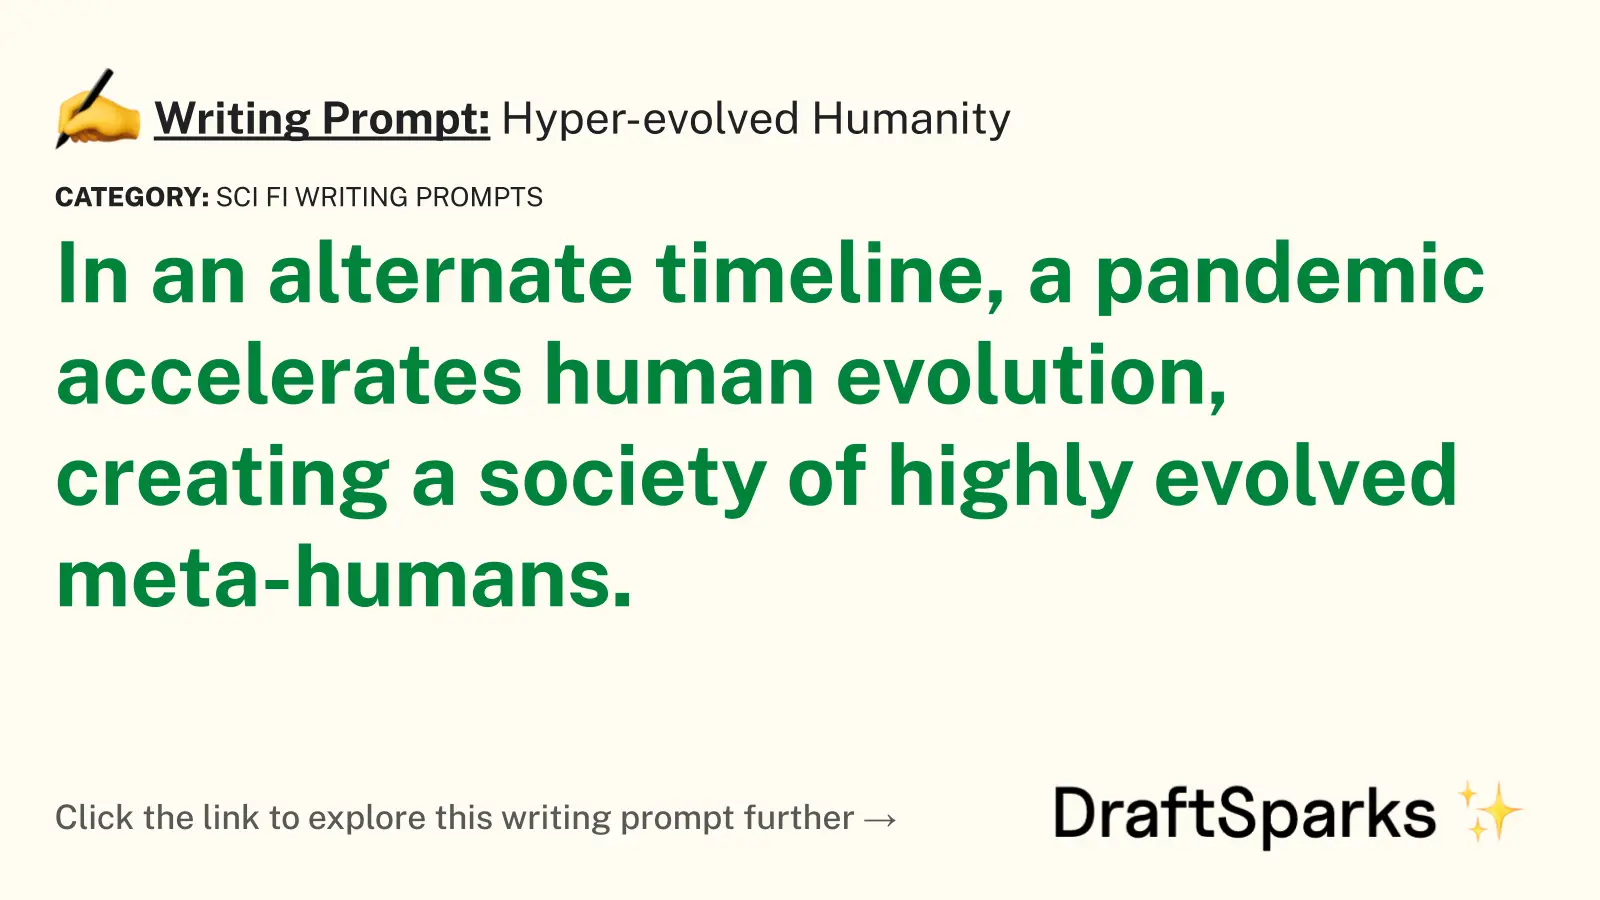 Hyper-evolved Humanity